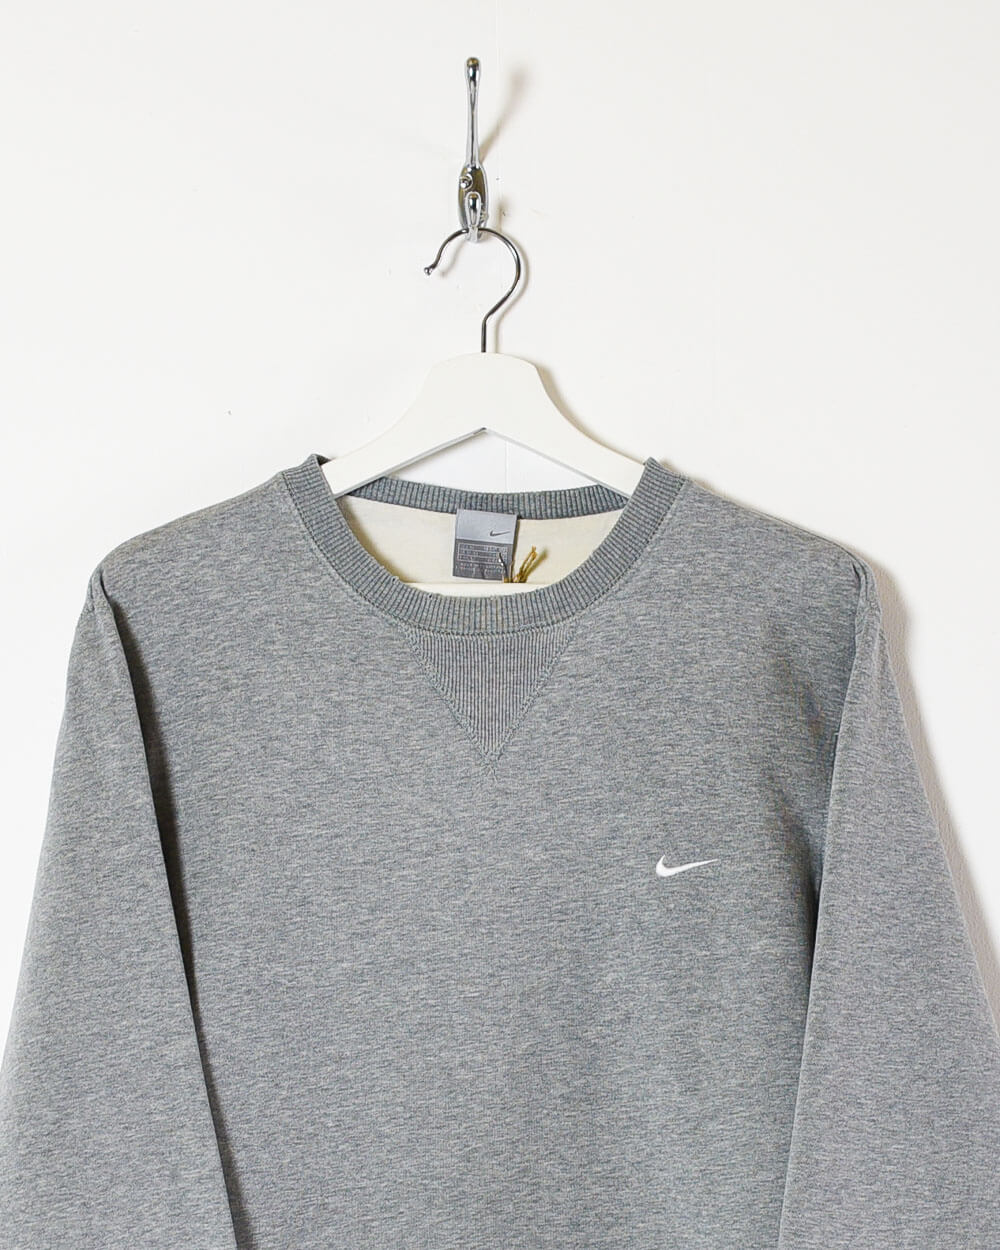 Stone Nike Sweatshirt - Medium